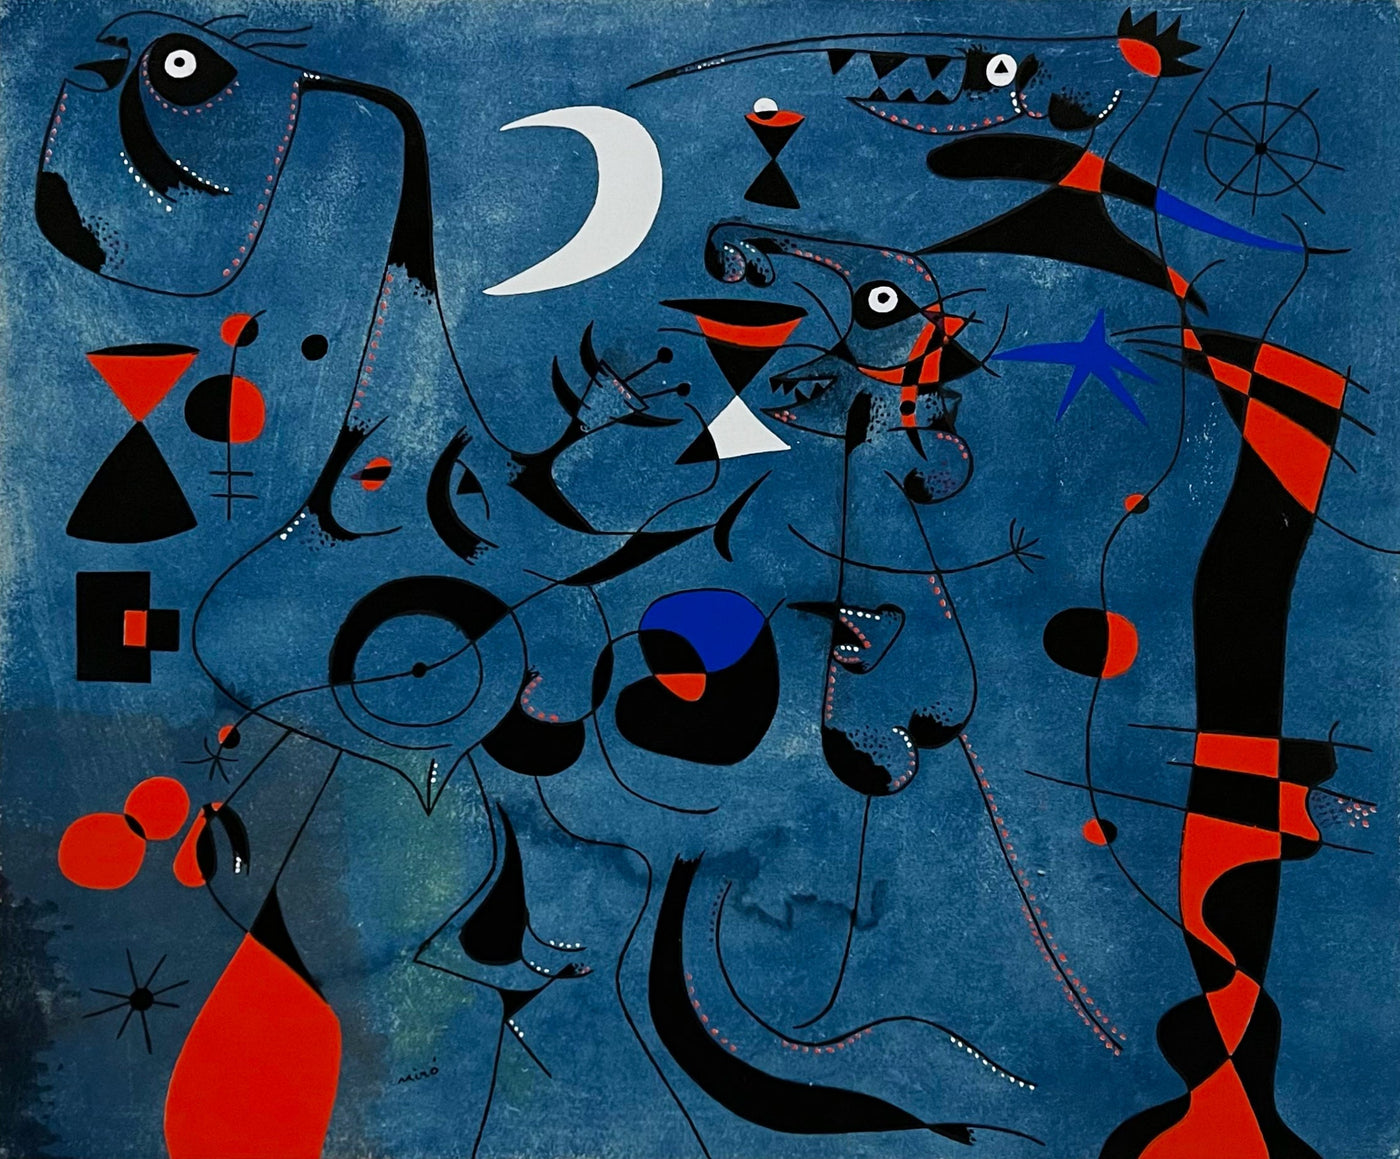 Joan Miro Personnages dans la nuit guides par les traces phosphorescentes des escargots (People at Night Guided by the Phosphorescent Trails of Snails), Plate III (Cramer No. 58) 1959